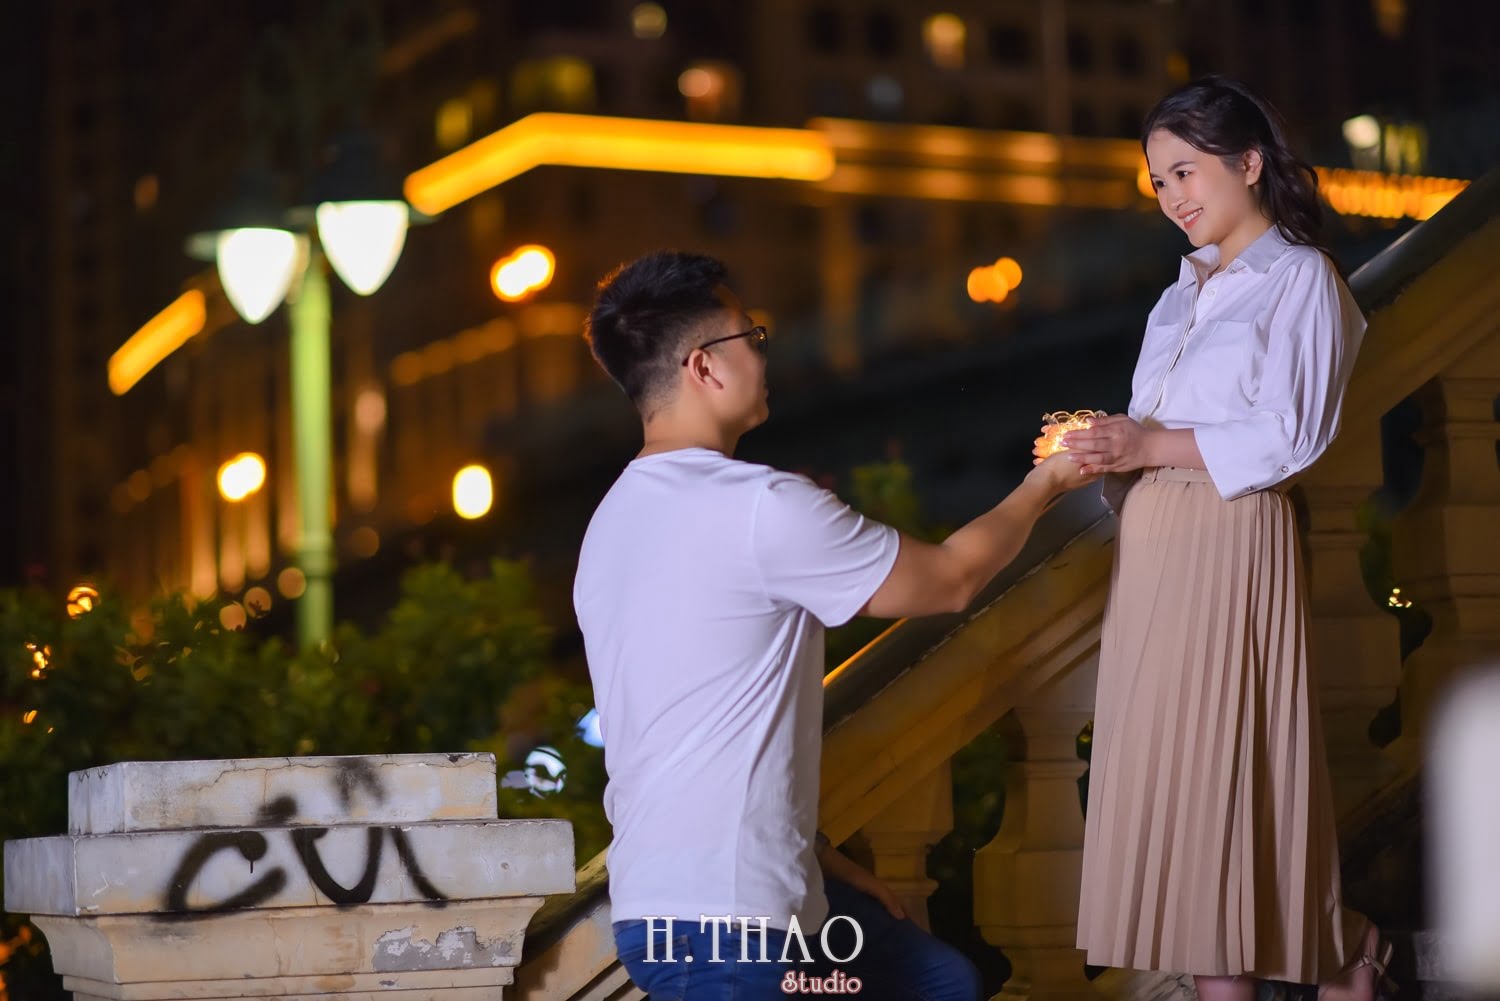 Anh chup couple ban dem 9 min - Album ảnh couple chụp buổi tối đẹp lung linh - HThao Studio